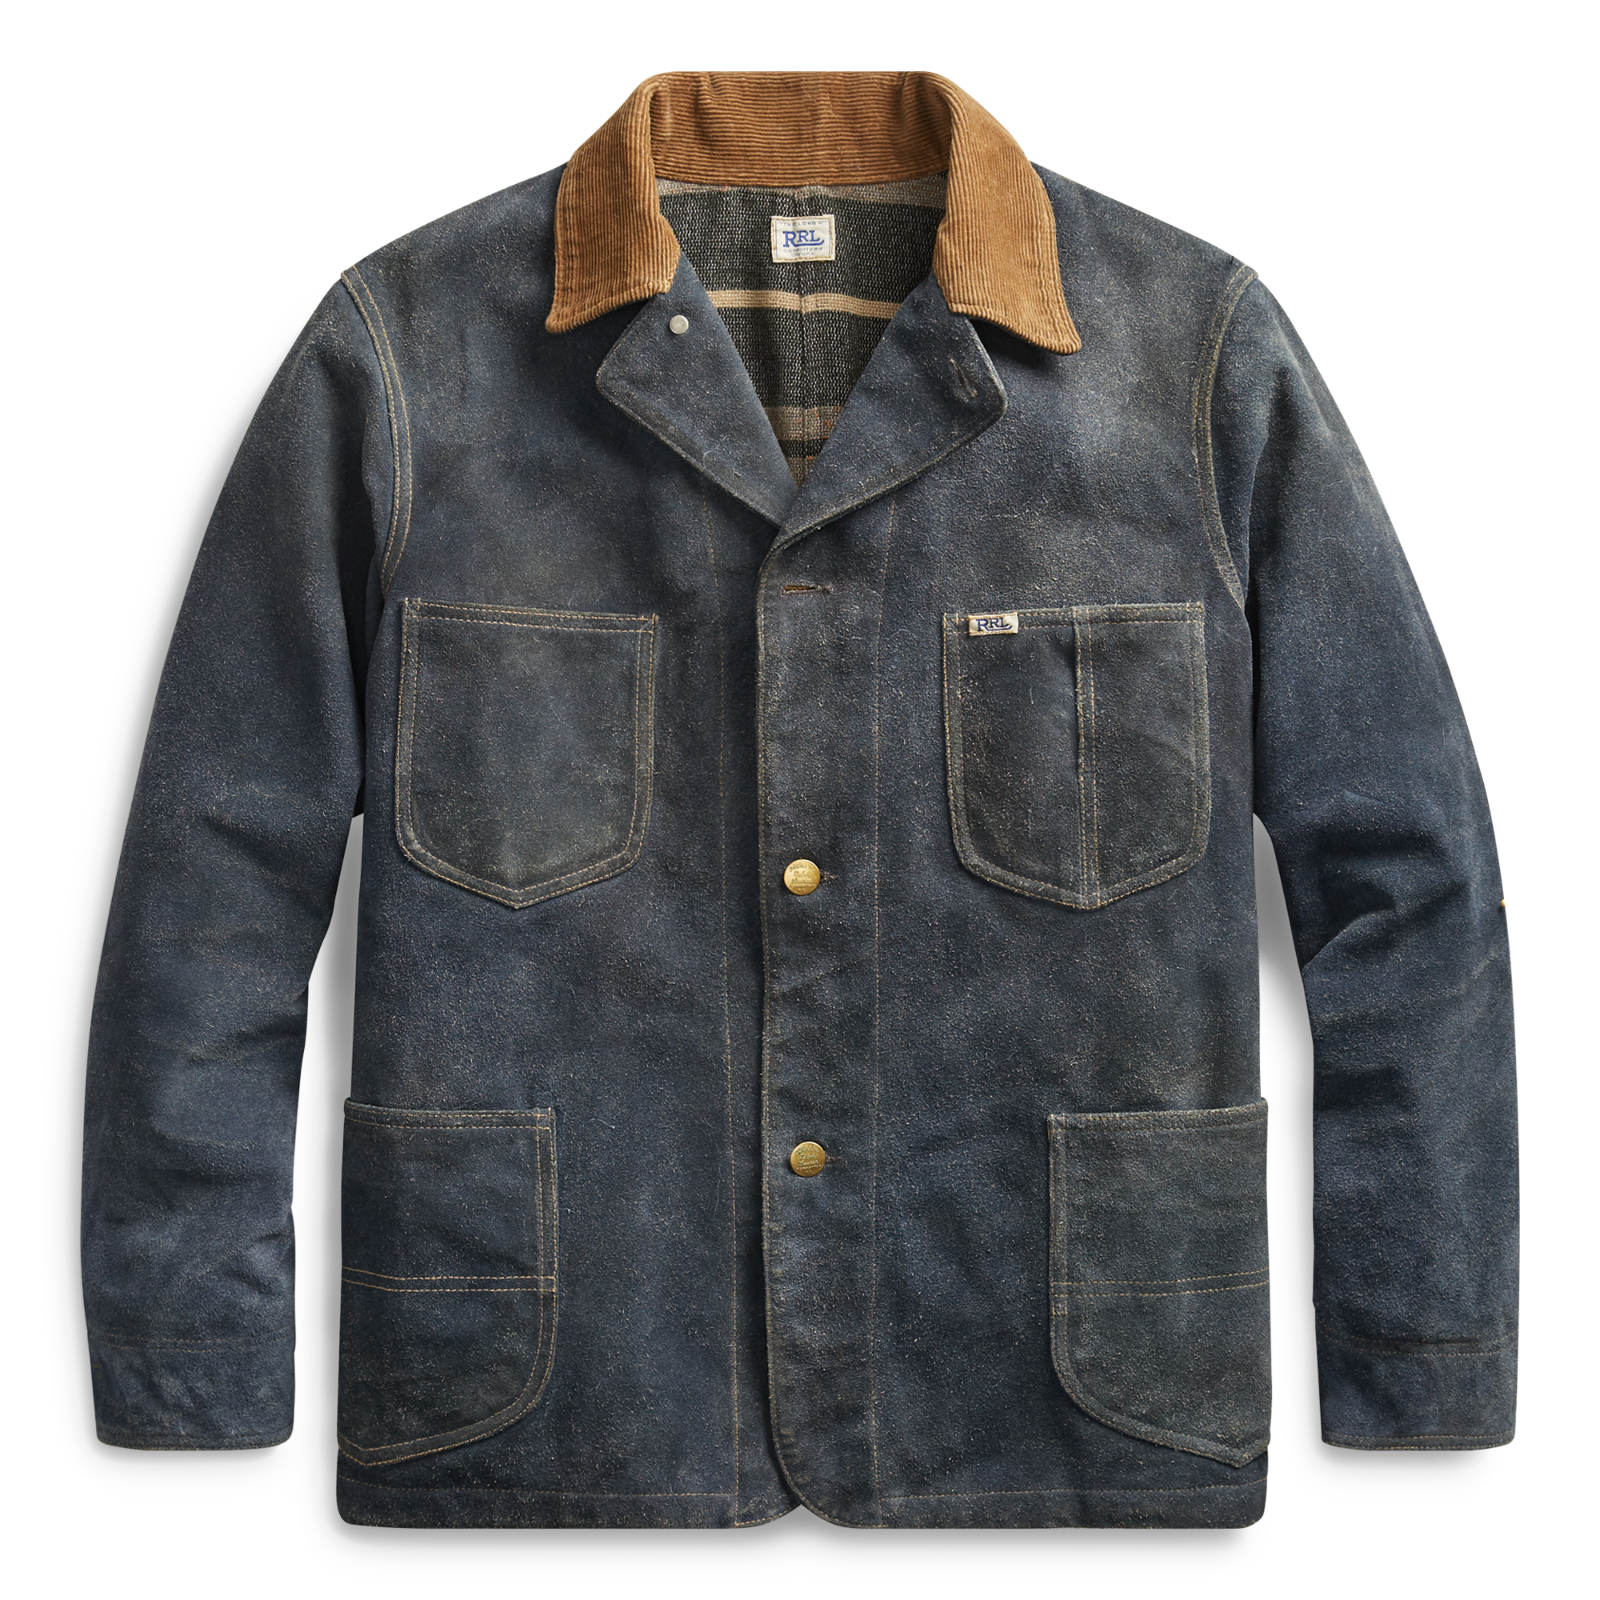 RRL Ralph Lauren Indigo Blue Waxed Suede Coat Leather Jacket Men's M Medium